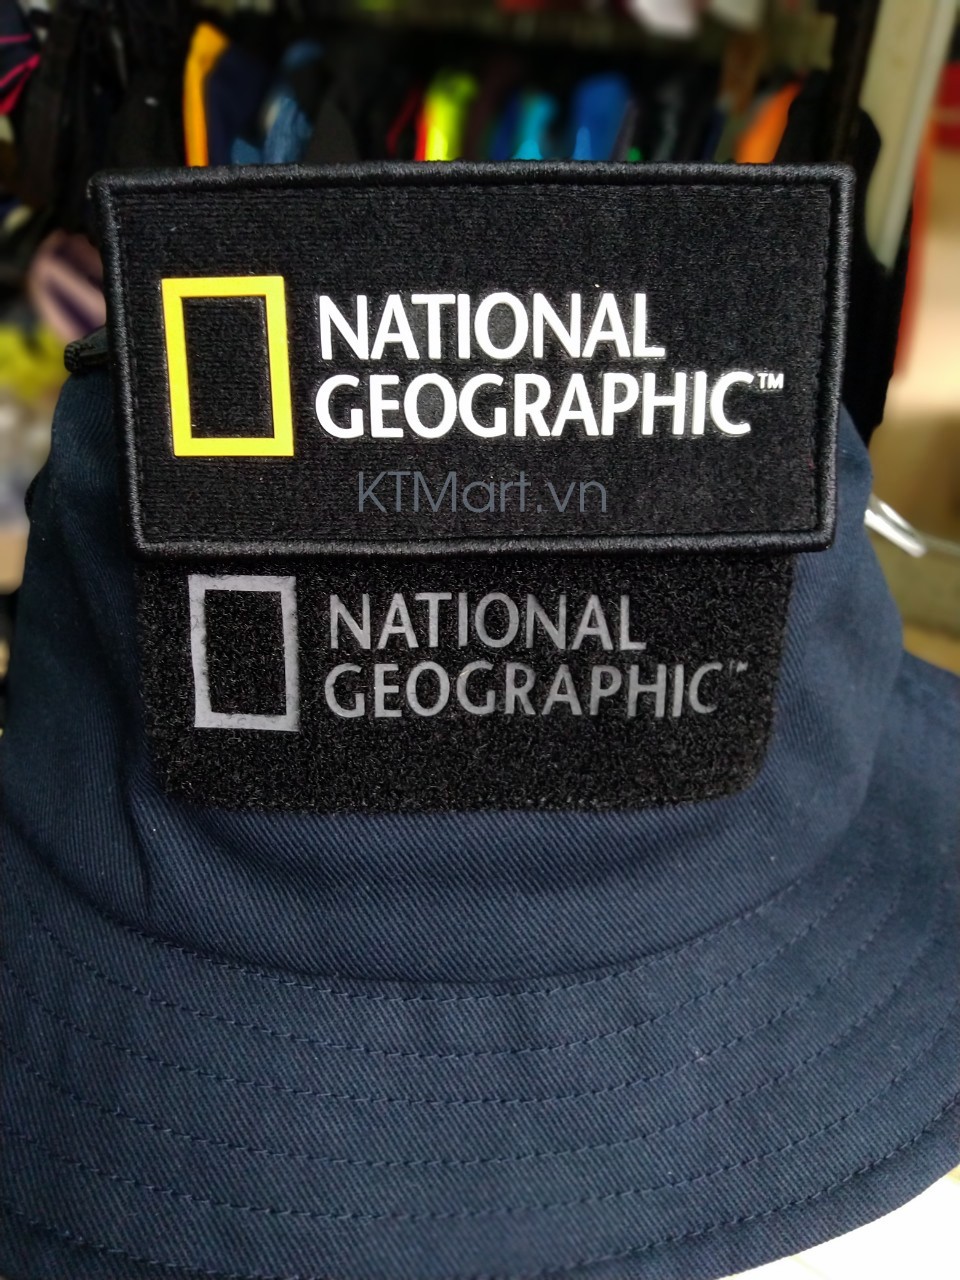 National Geographic Engineer Bucket Hat N181UHA190 ktmart.vn 21